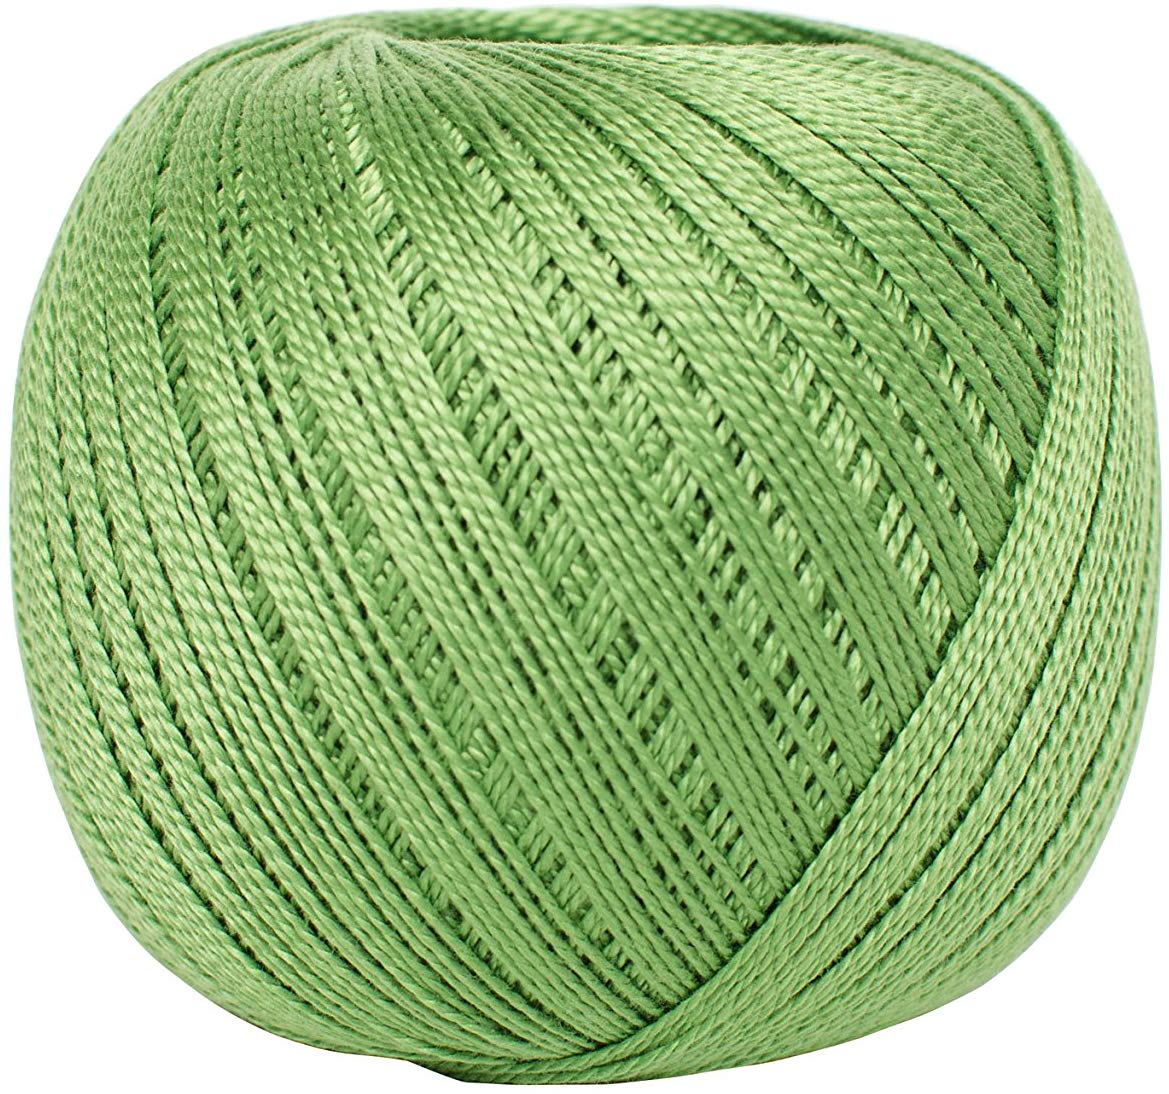  CraftyArt Cotton Crochet Thread Mercerized Tatting Thread Size  20 DIY Craft Embroidery Yarn Doilies Lacey Threads multicolor : Arts,  Crafts & Sewing